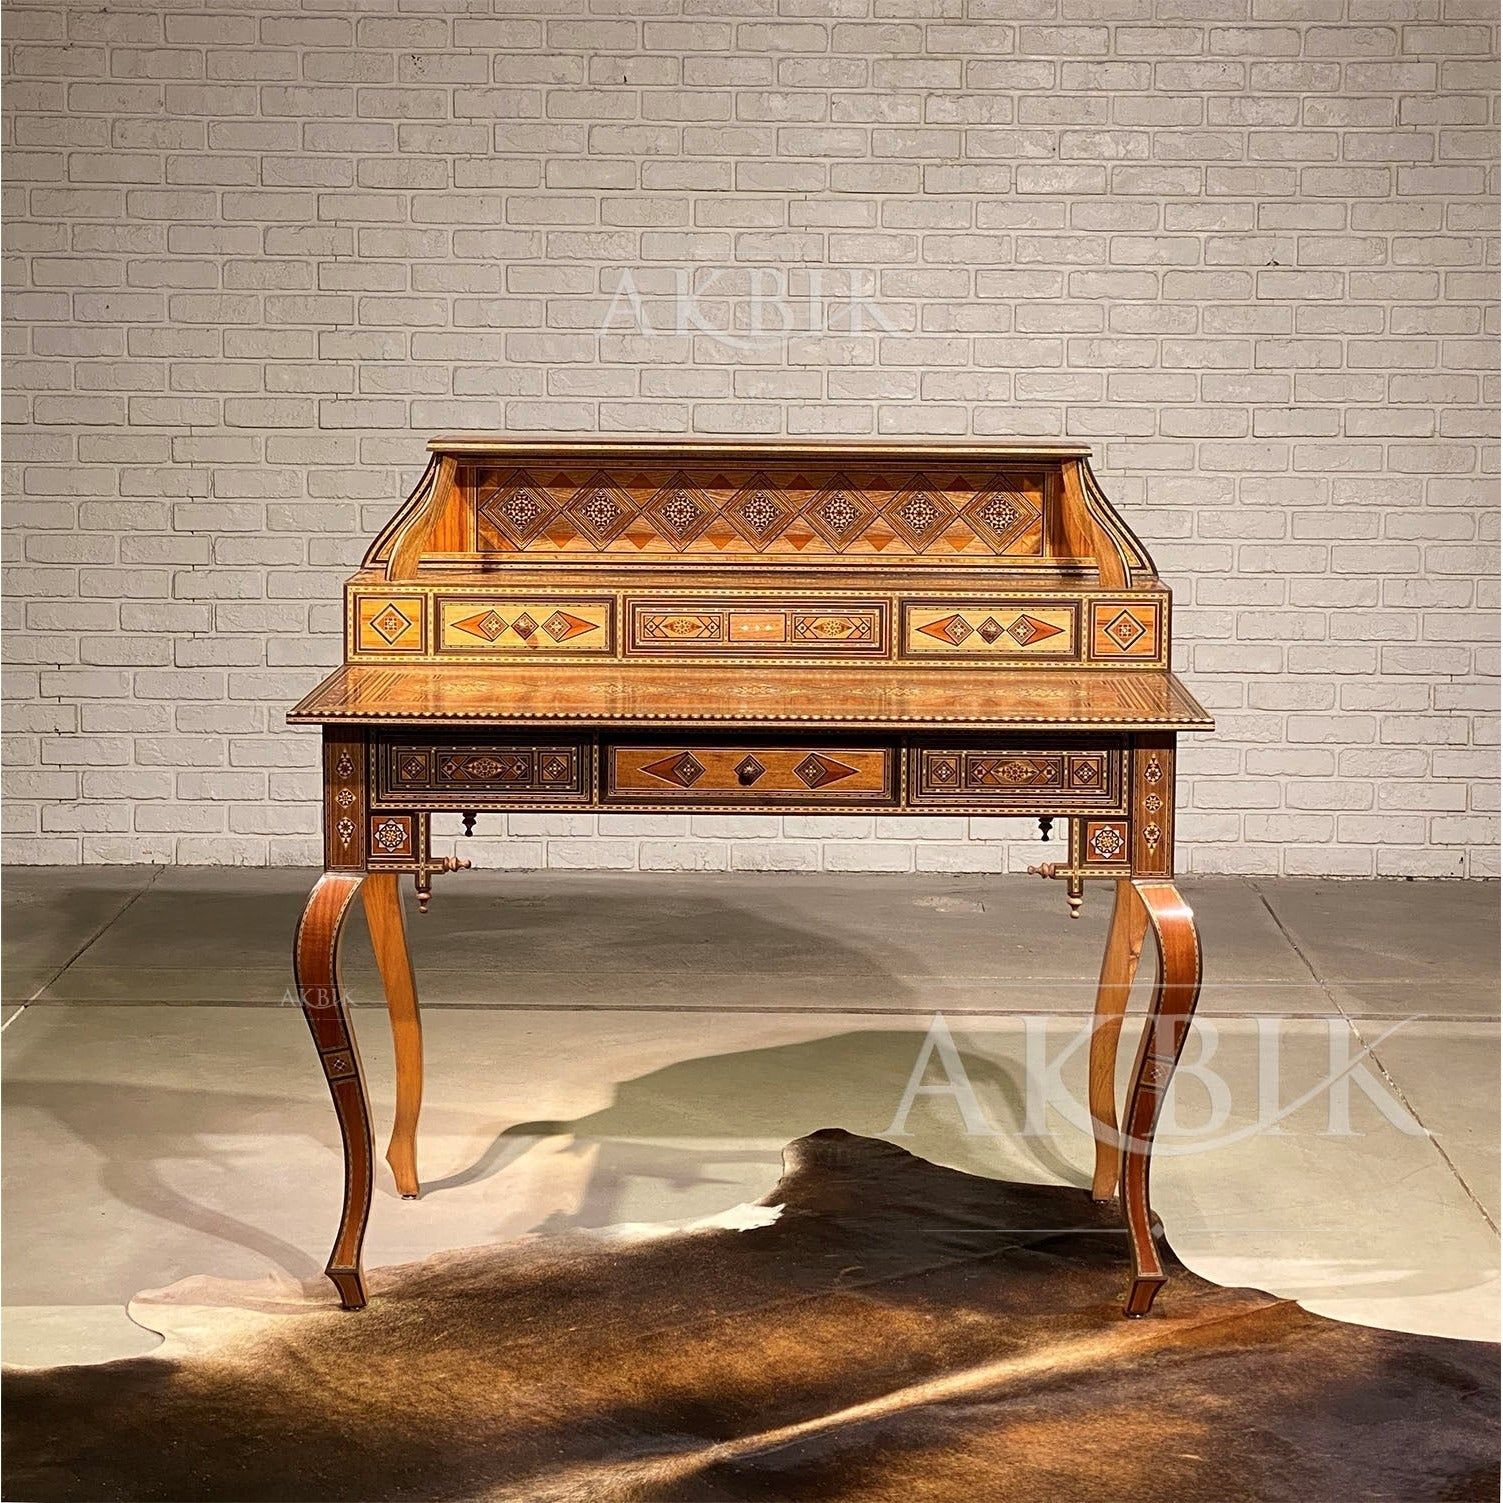 MOSAIC MARQUETRY DESK - AKBIK Furniture & Design